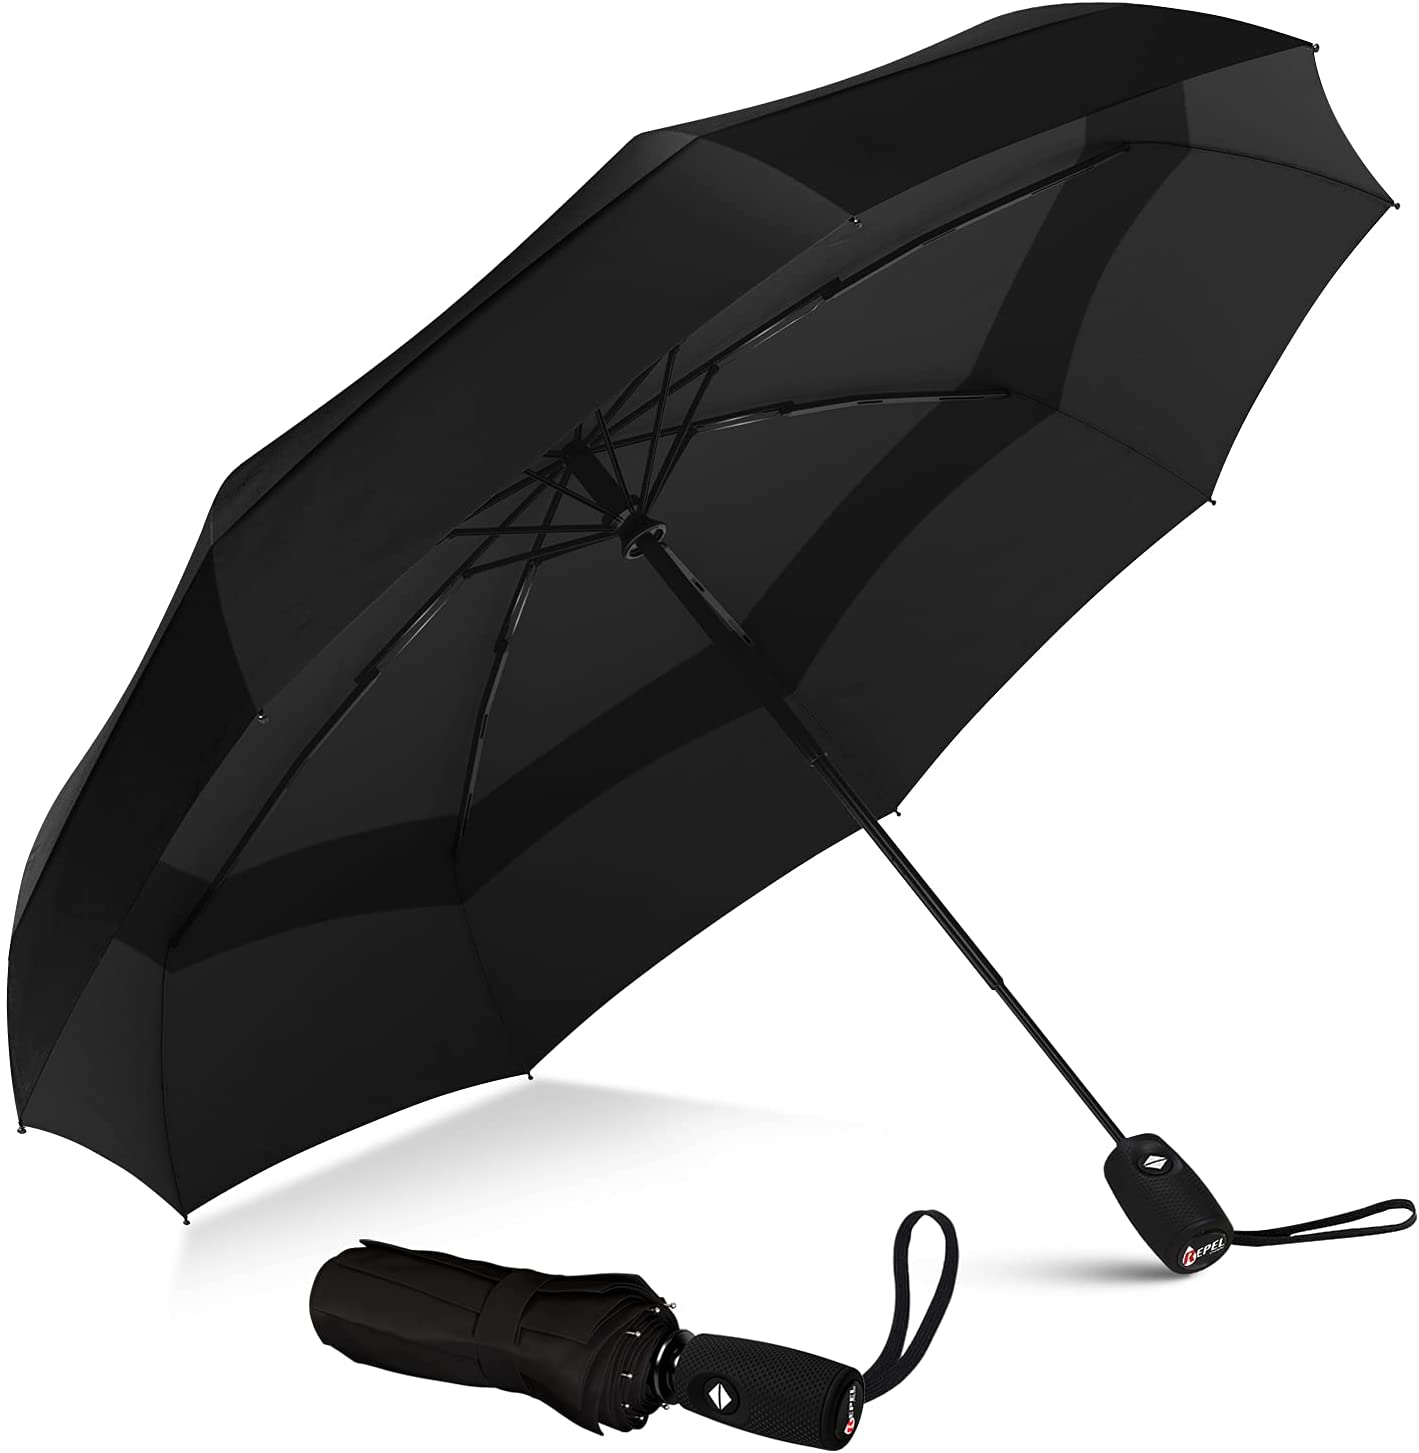 Useful travel gifts - umbrella